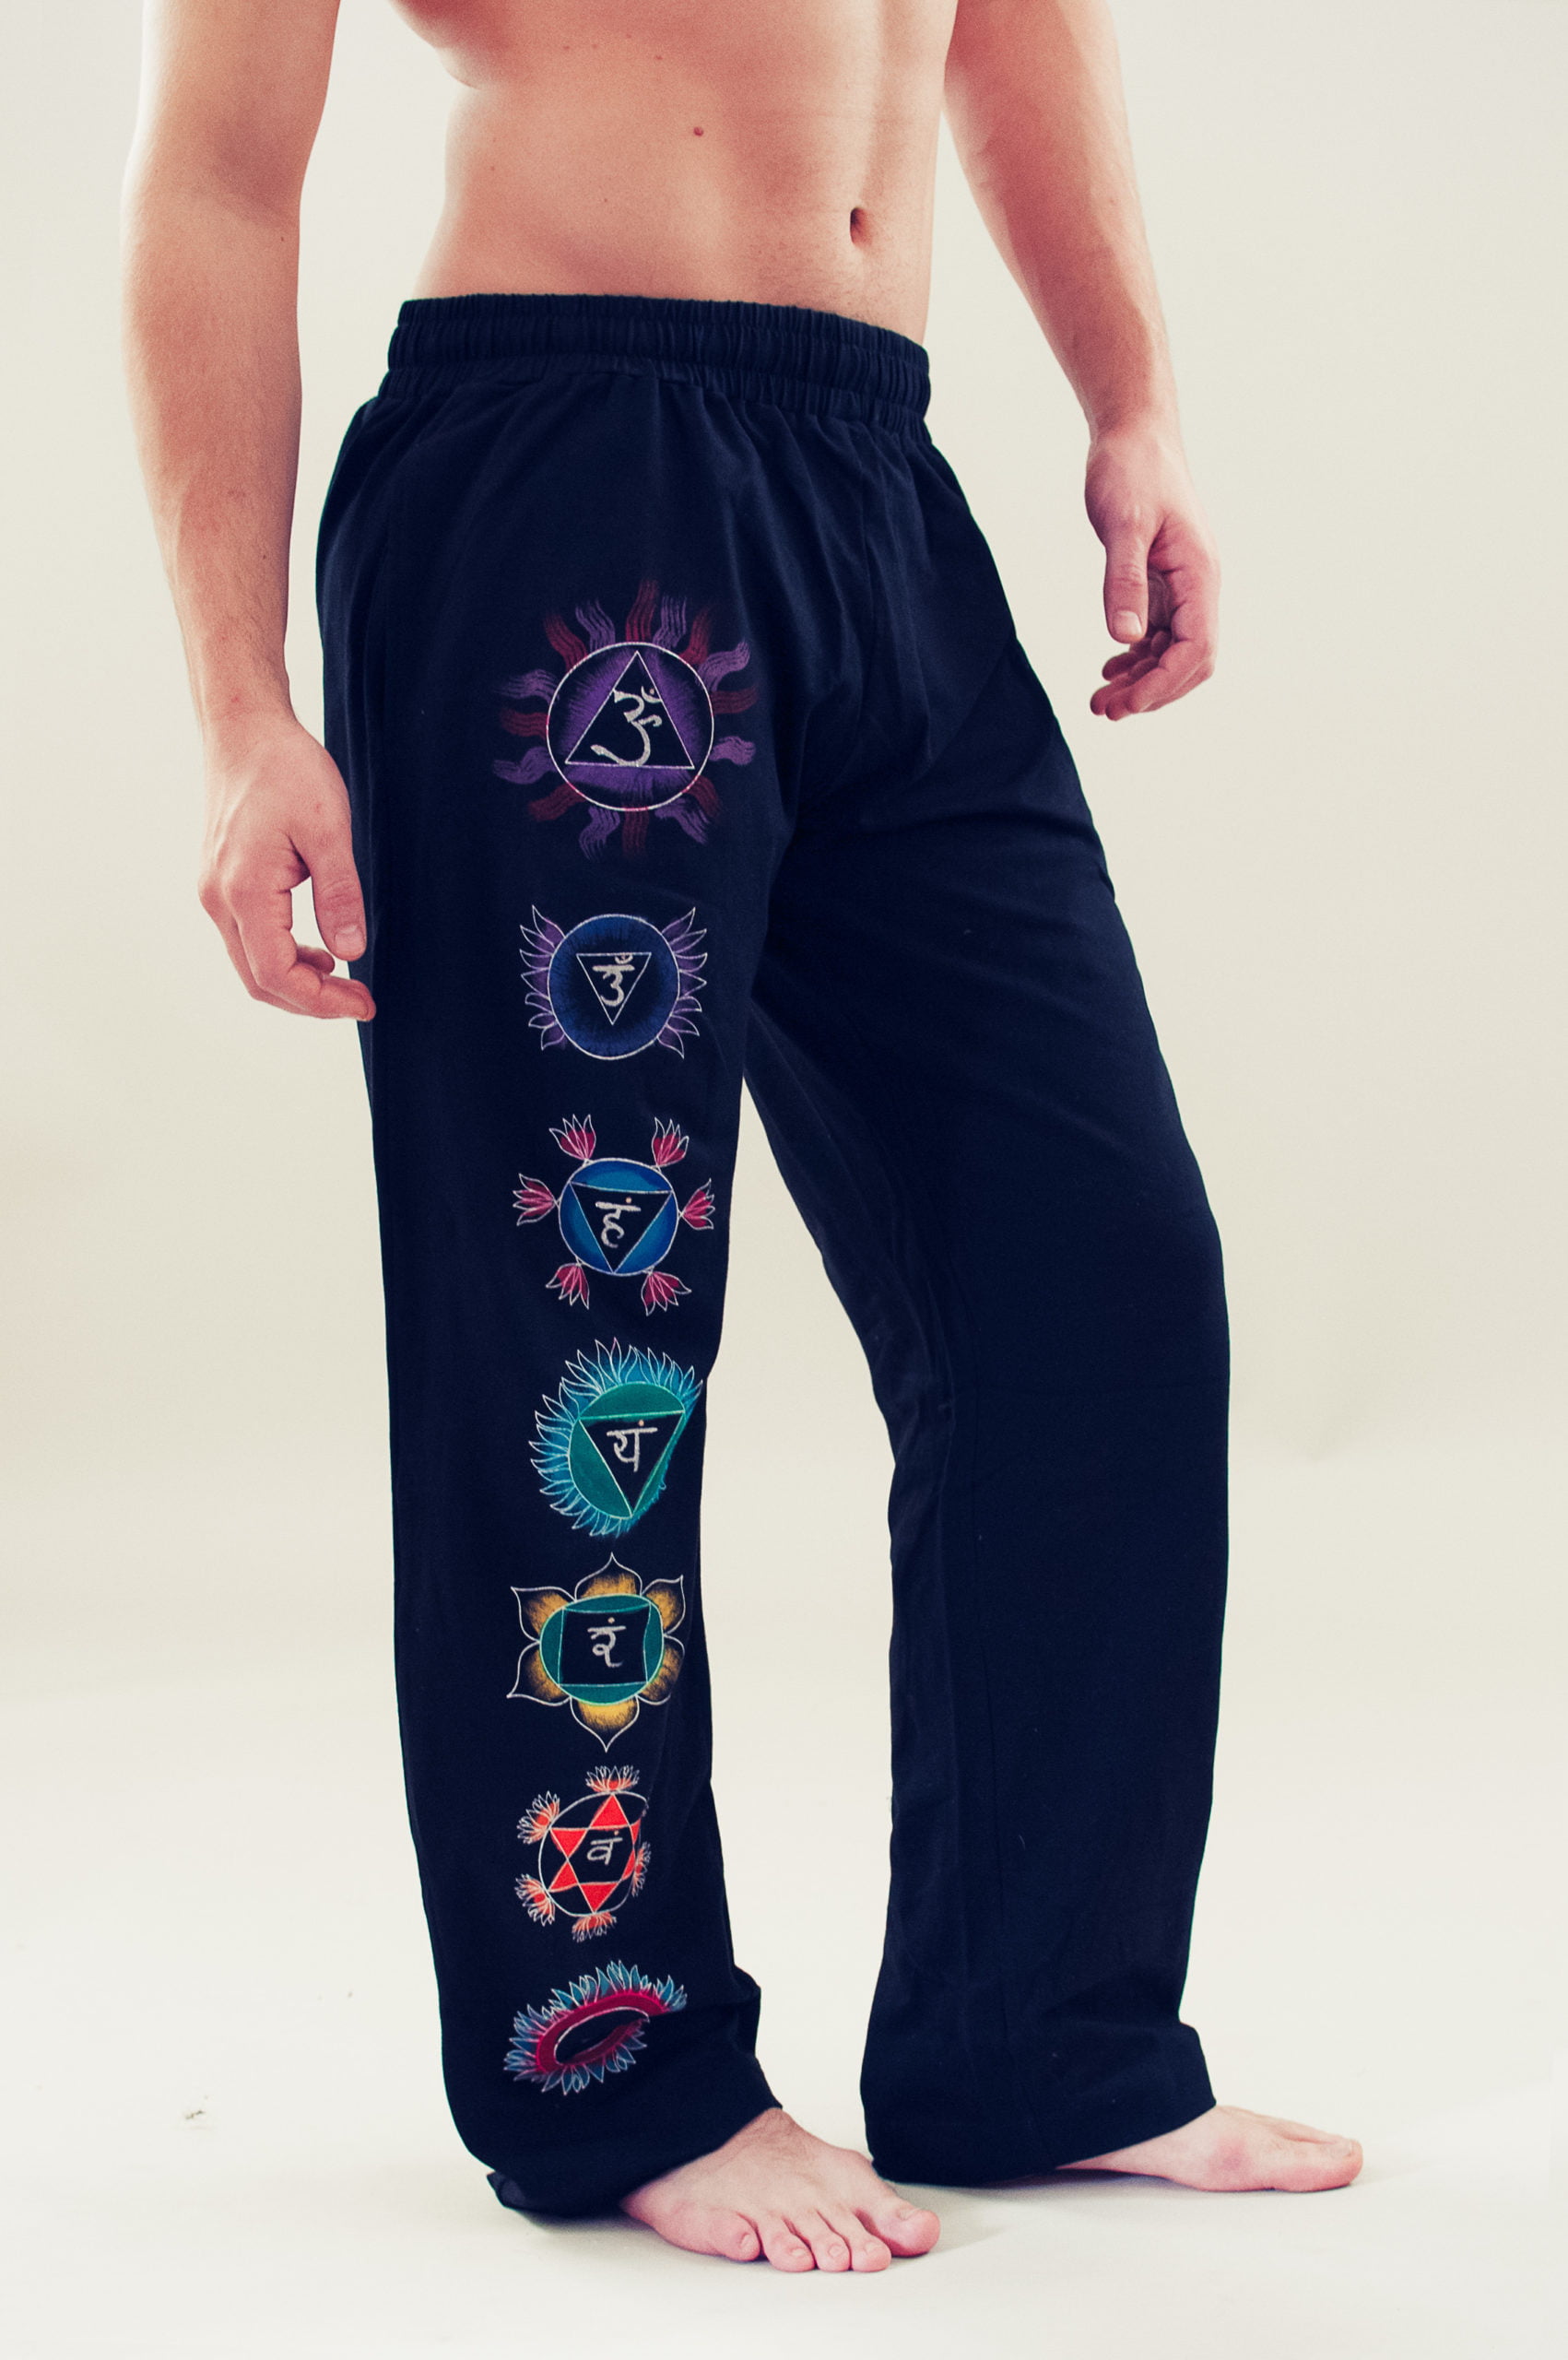 PRDECE Fitness Yoga Suit Set - Short-Sleeved Shorts, UK